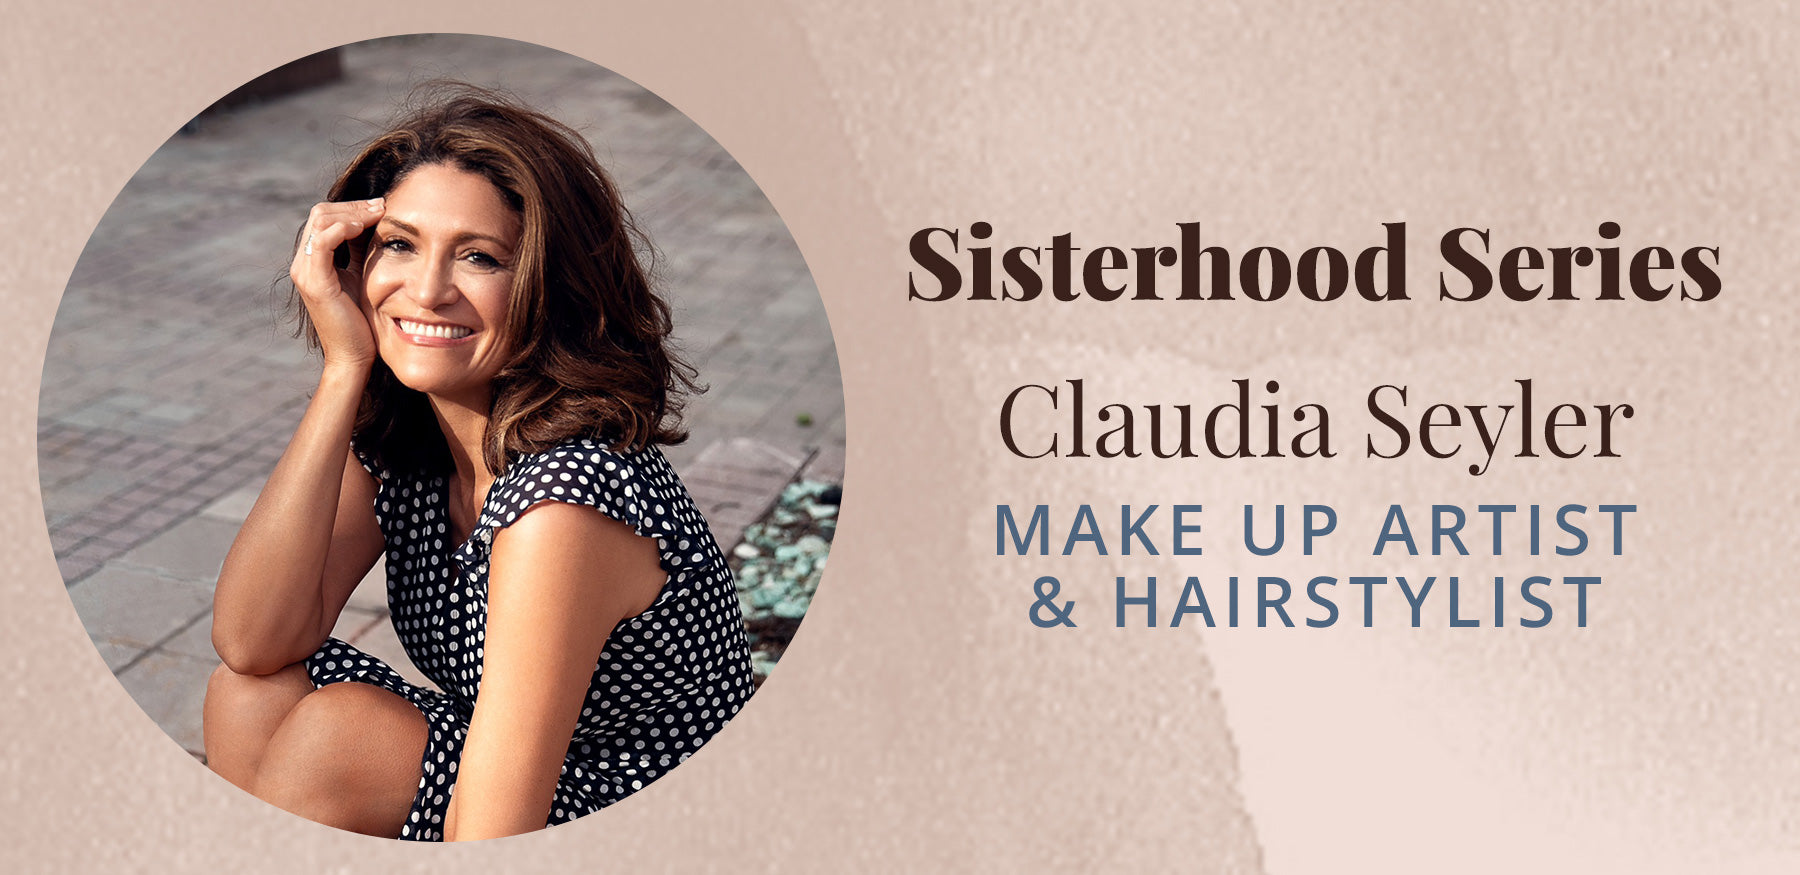 The Sisterhood Series with Claudia Seyler